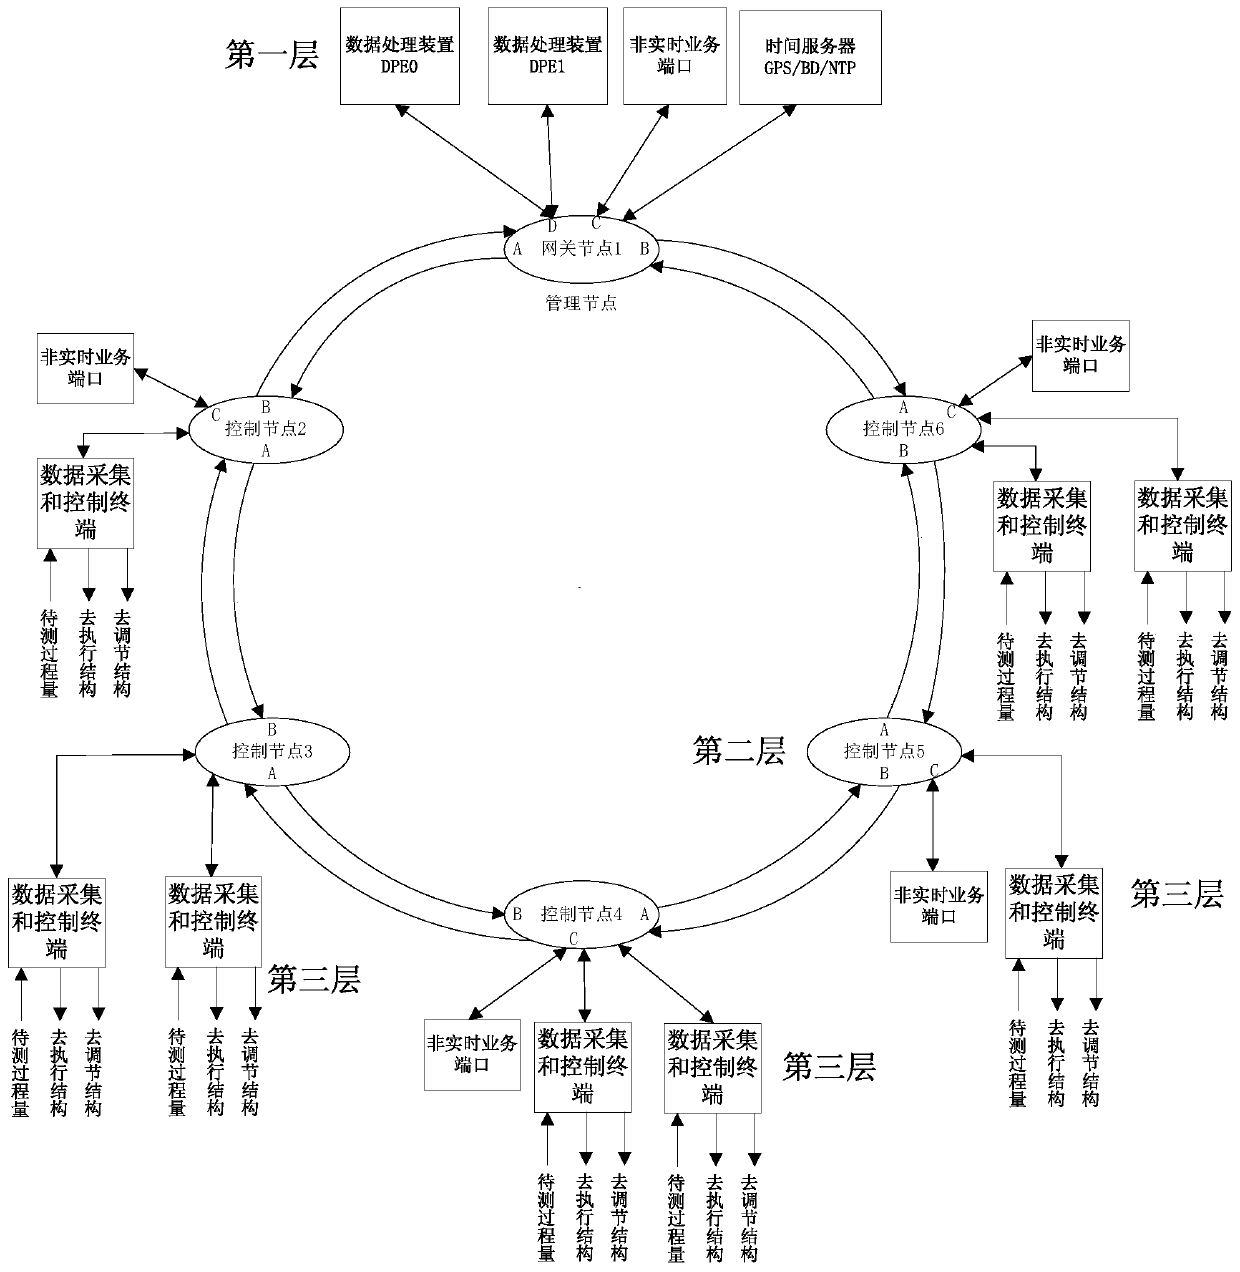 Multi-node synchronous sampling and data transmission method in ring communication network